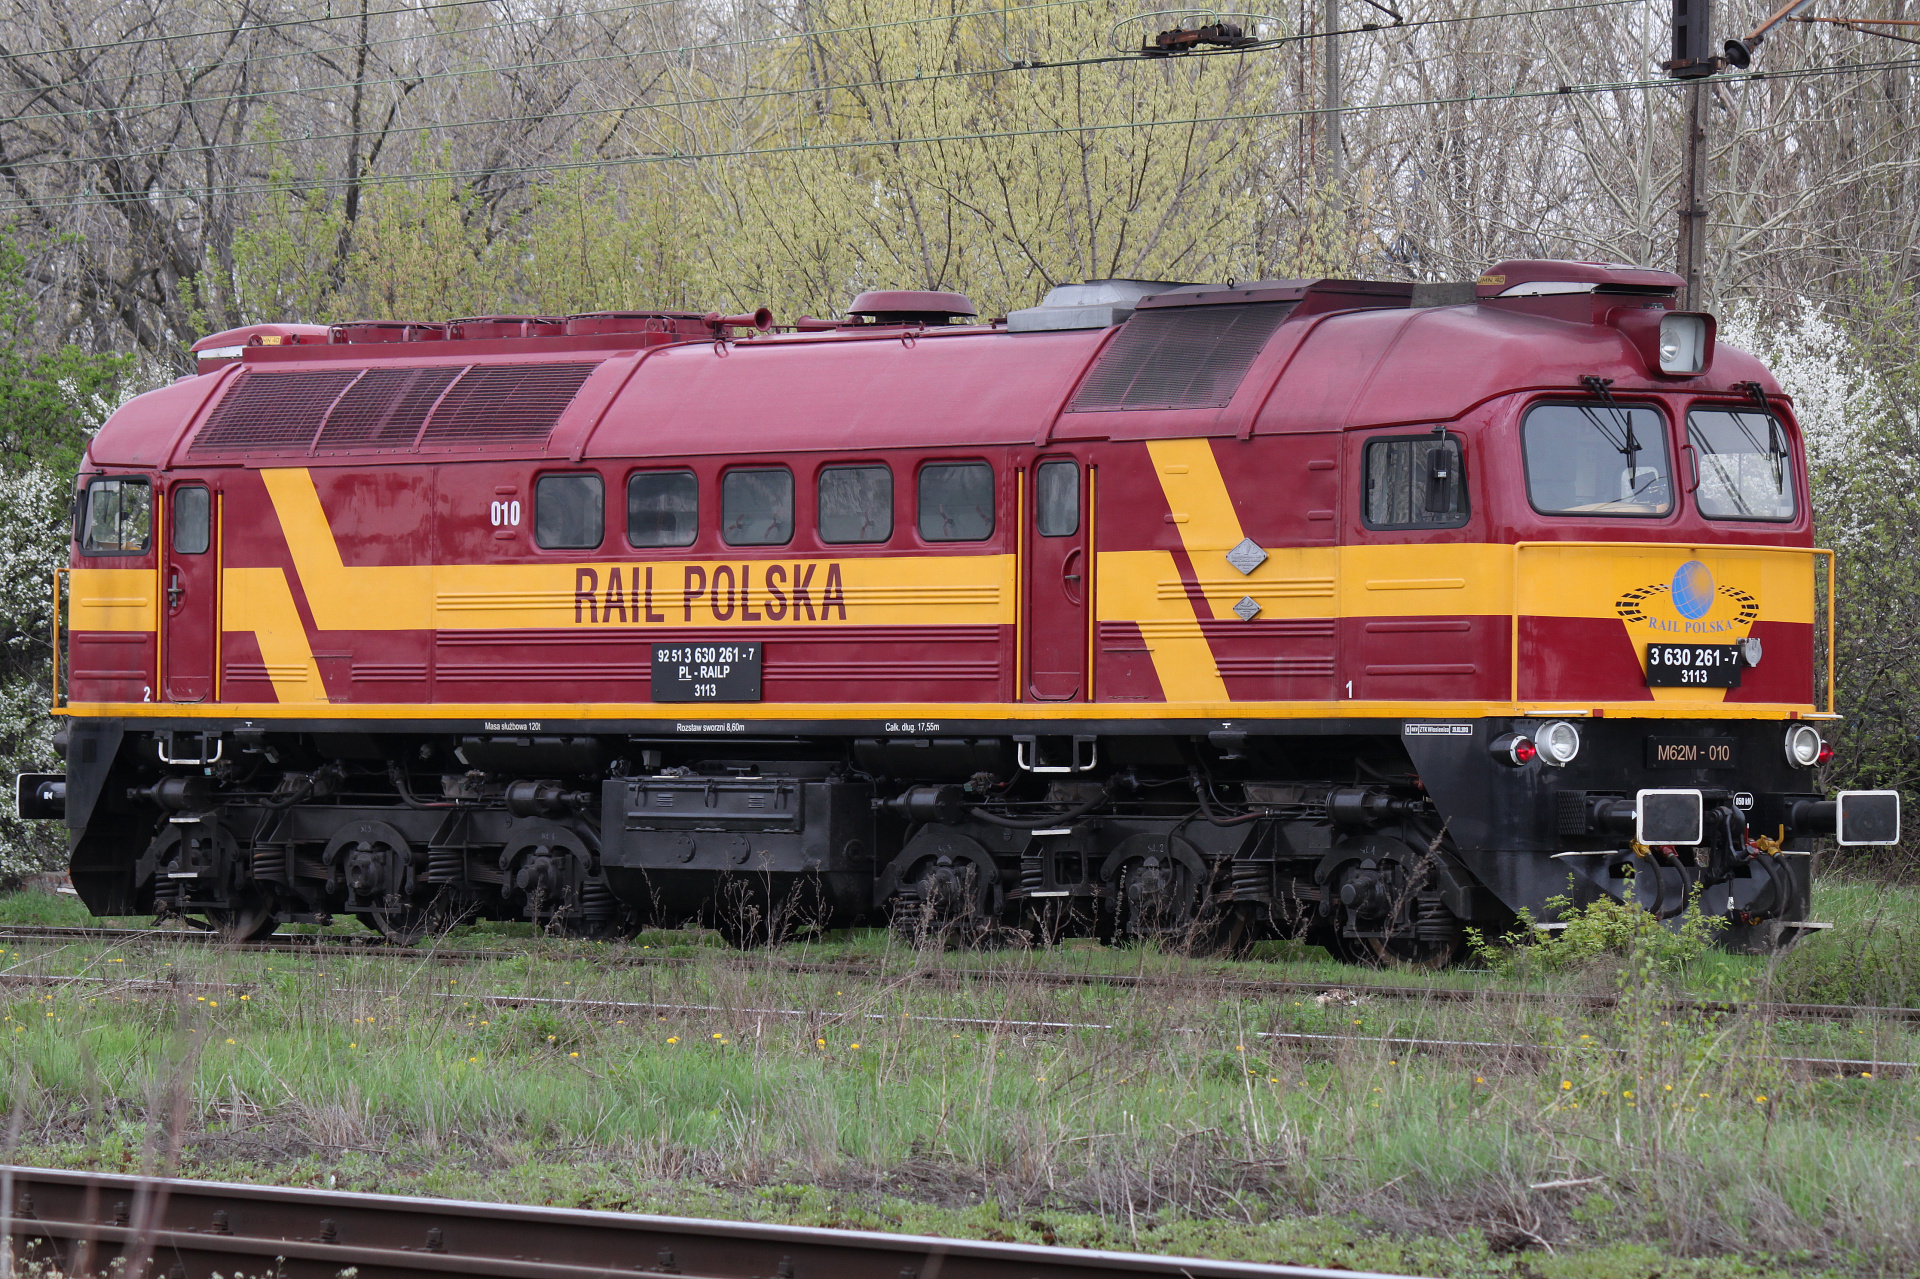 M62M-010 (Vehicles » Trains and Locomotives)